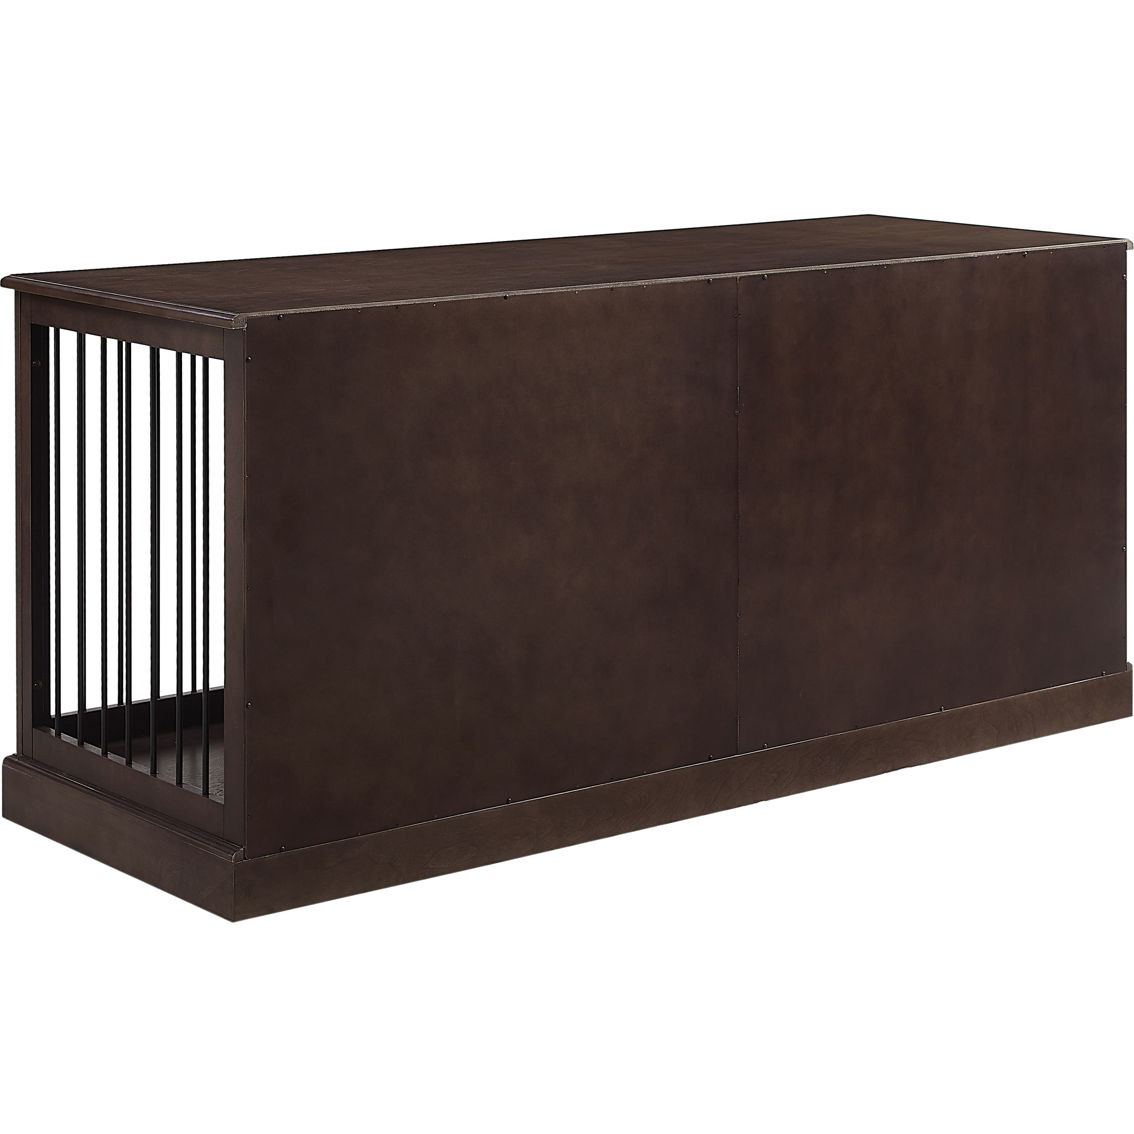 Crosley Furniture Winslow Medium Credenza Pet Crate, Dark Brown - Image 2 of 7